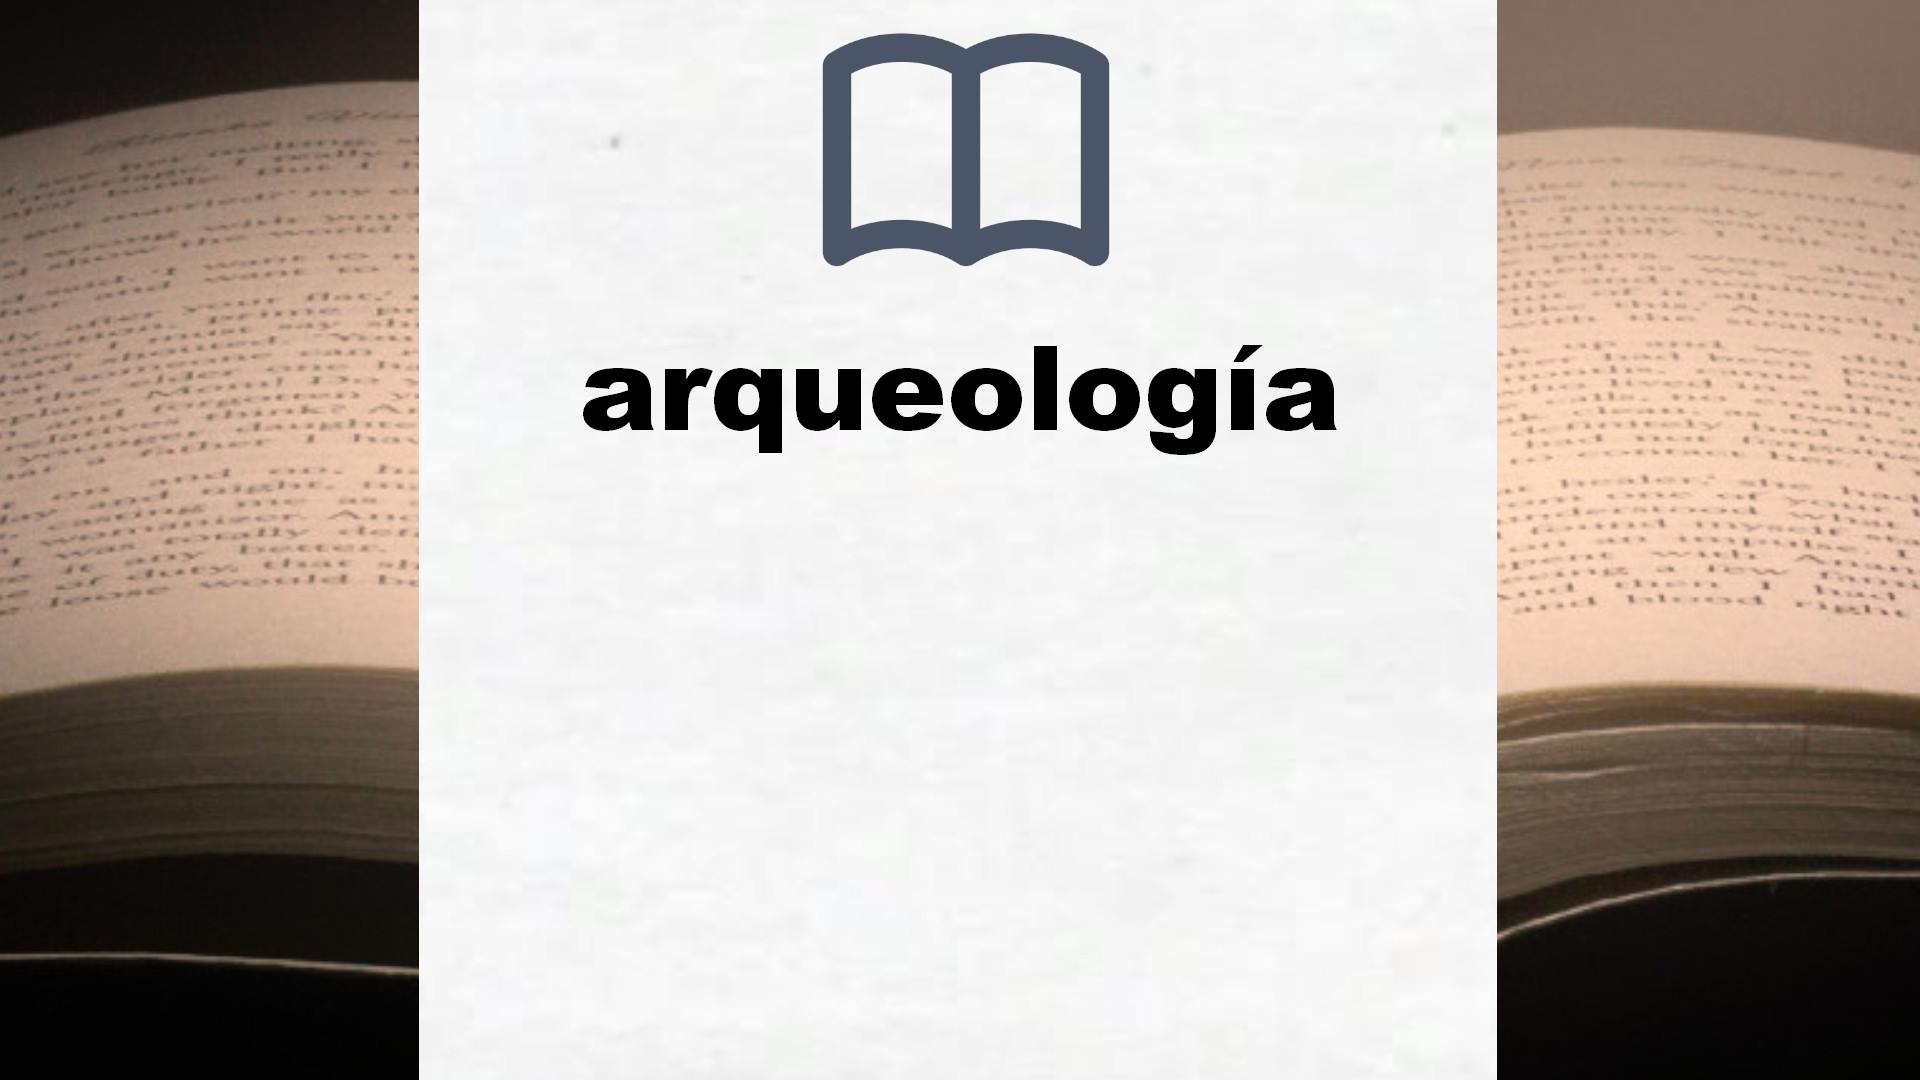 Libros sobre arqueología